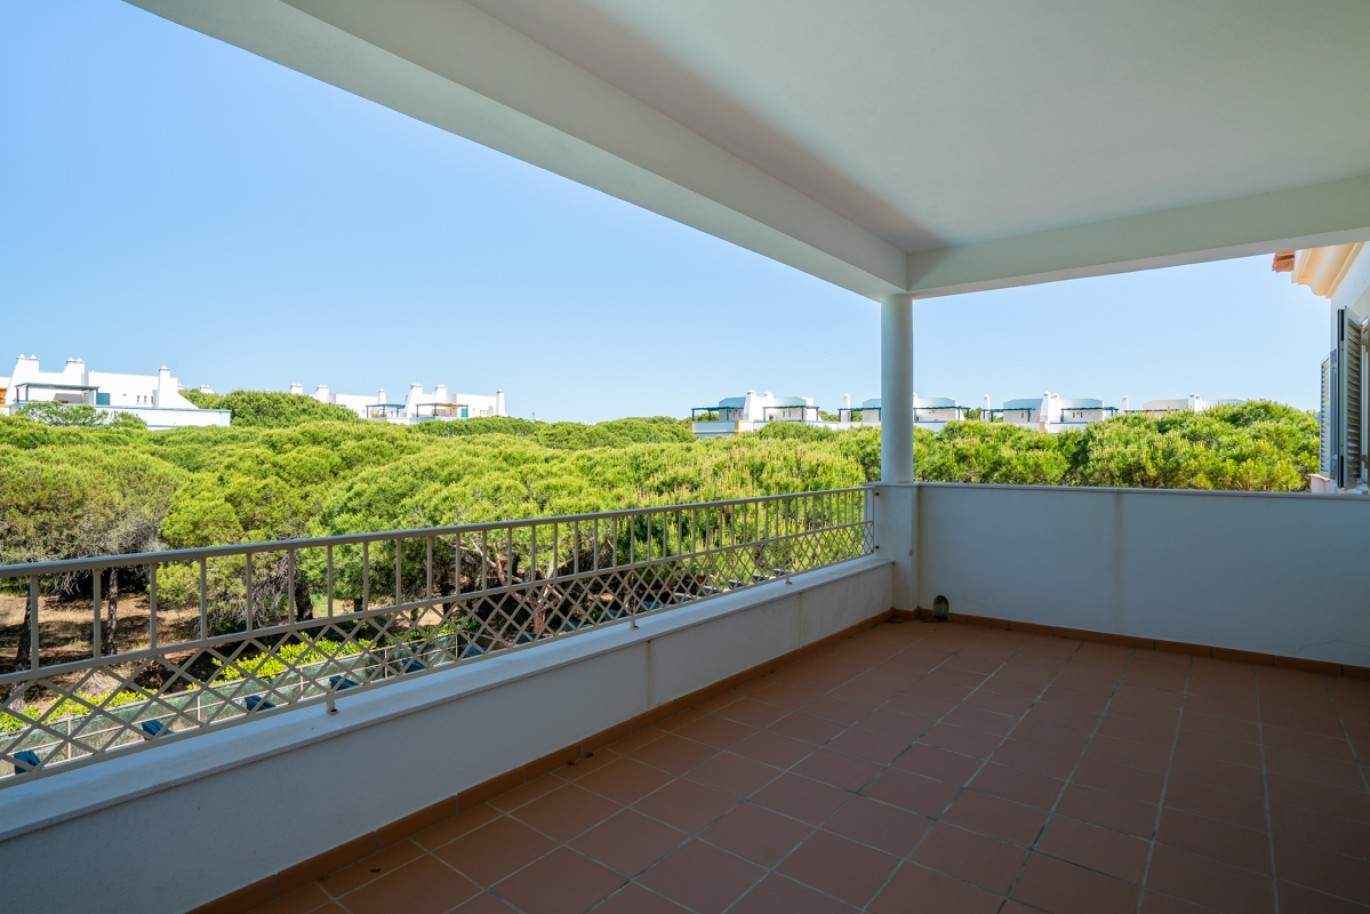 Venda de vivienda en Praia Verde, Castro Marim, Algarve, Portugal_80393